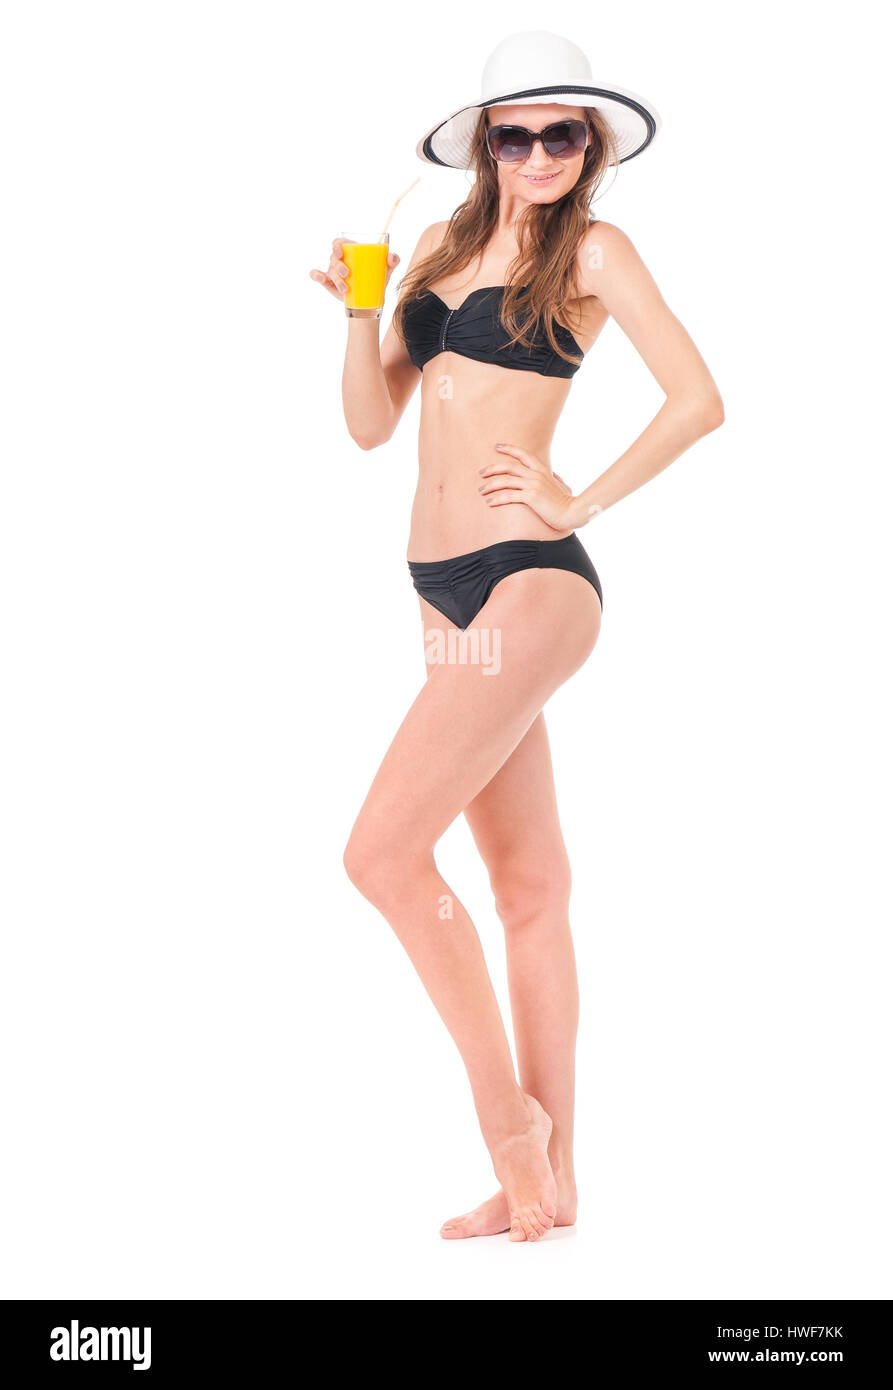 Girl bikini full body hi-res stock photography and images - Alamy